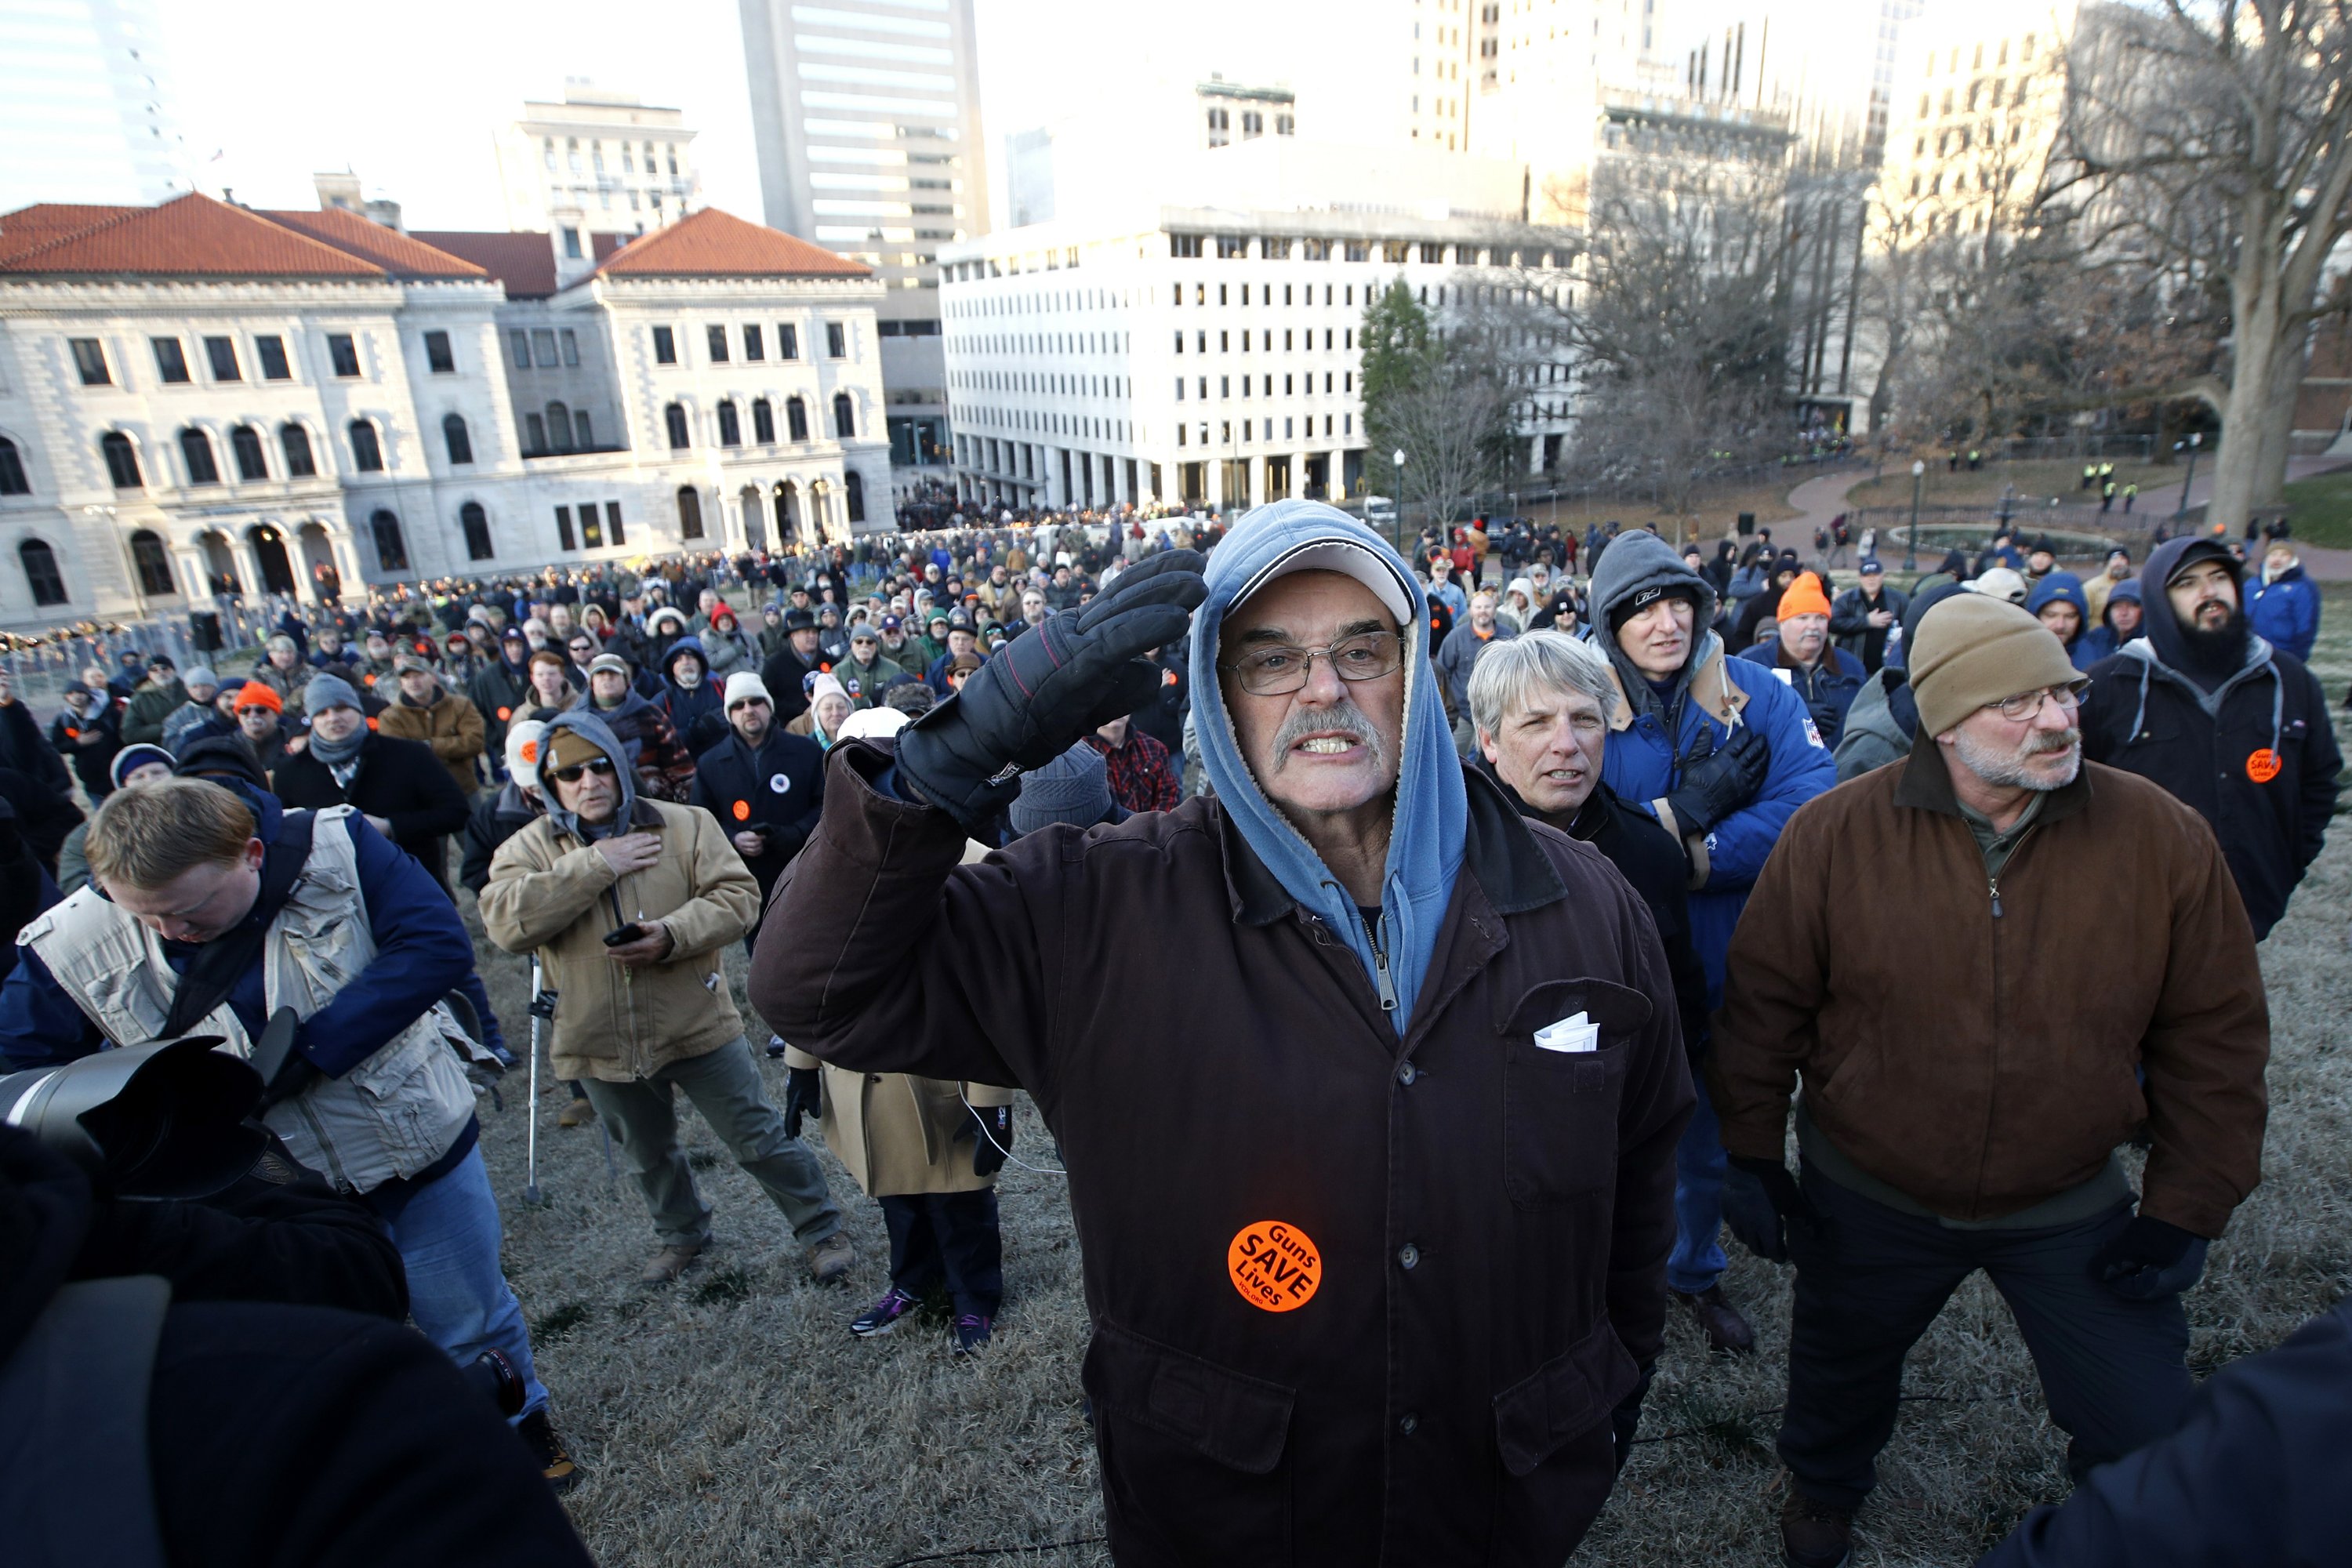 Virginia's capital braces for gun-rights rally